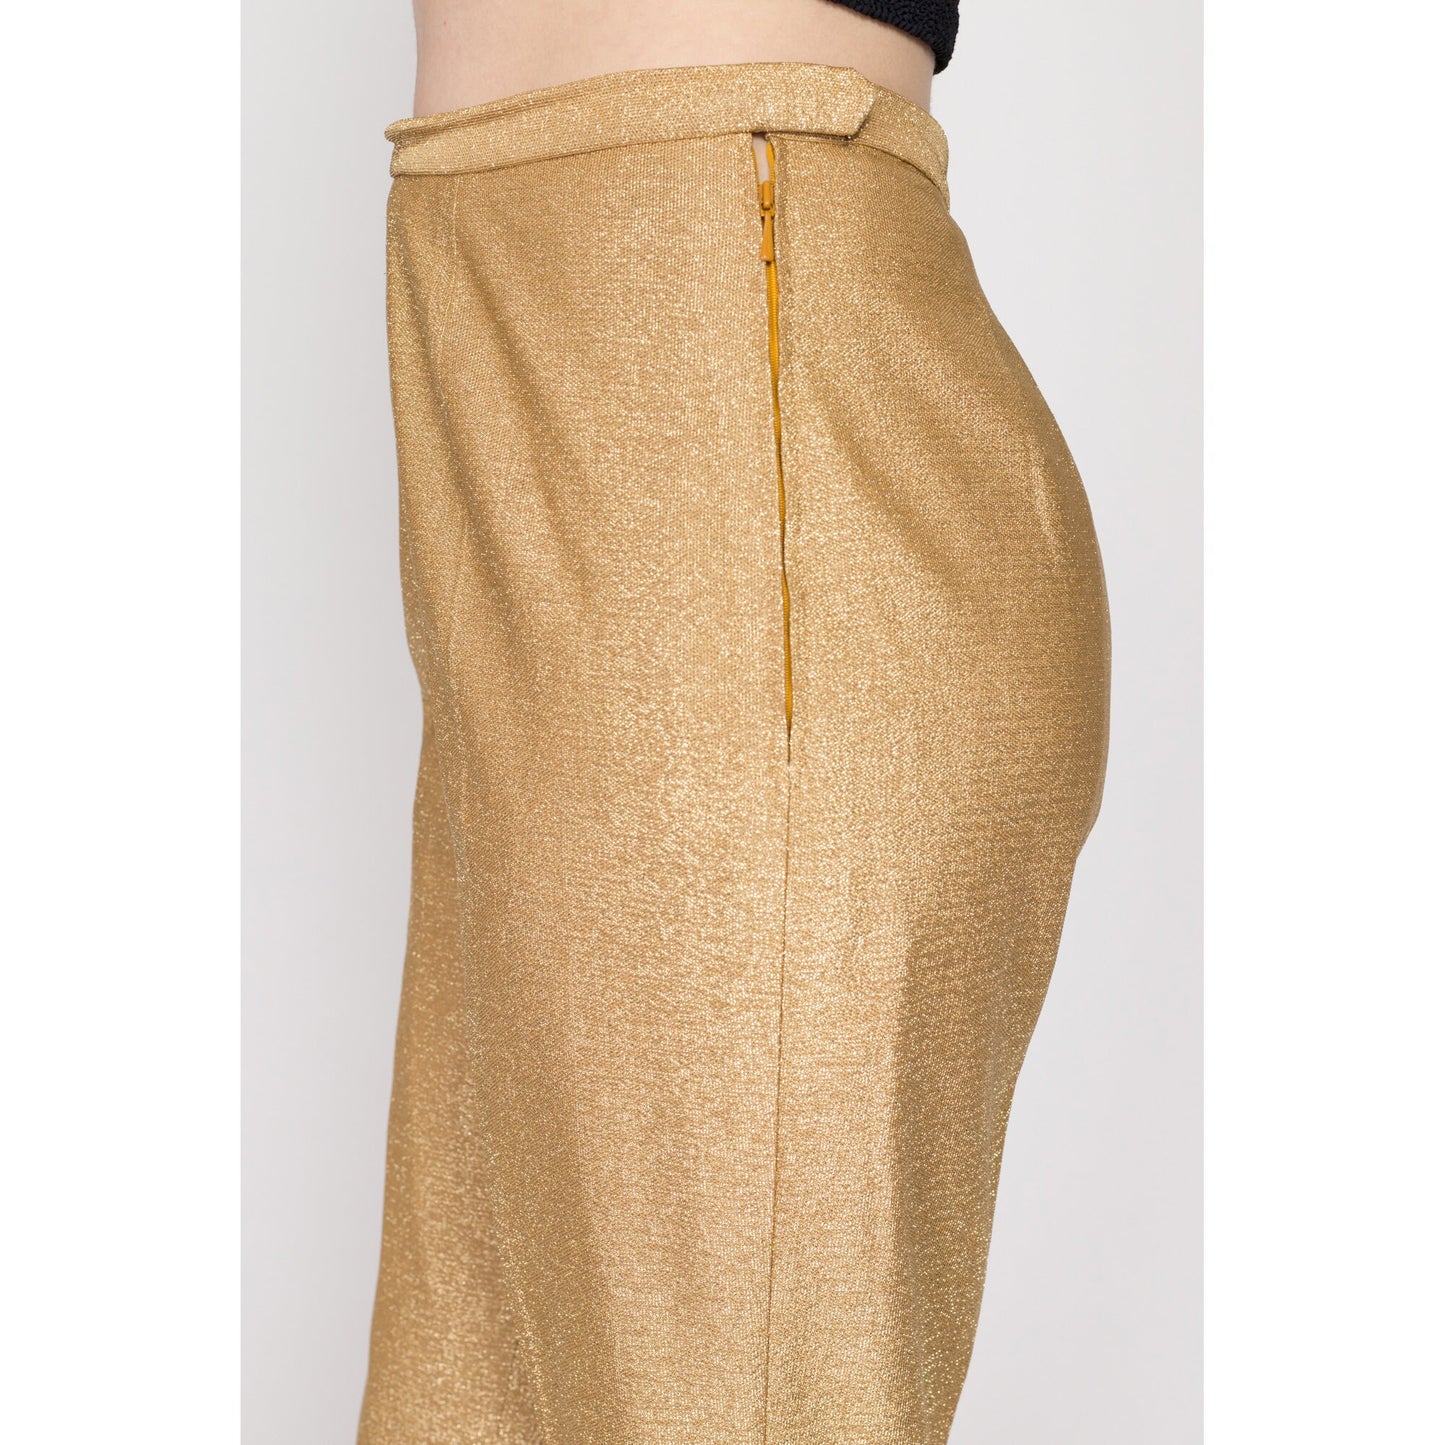 Medium 80s Shiny Gold Metallic Pants 29" | Vintage High Waisted Bootcut Disco Trousers